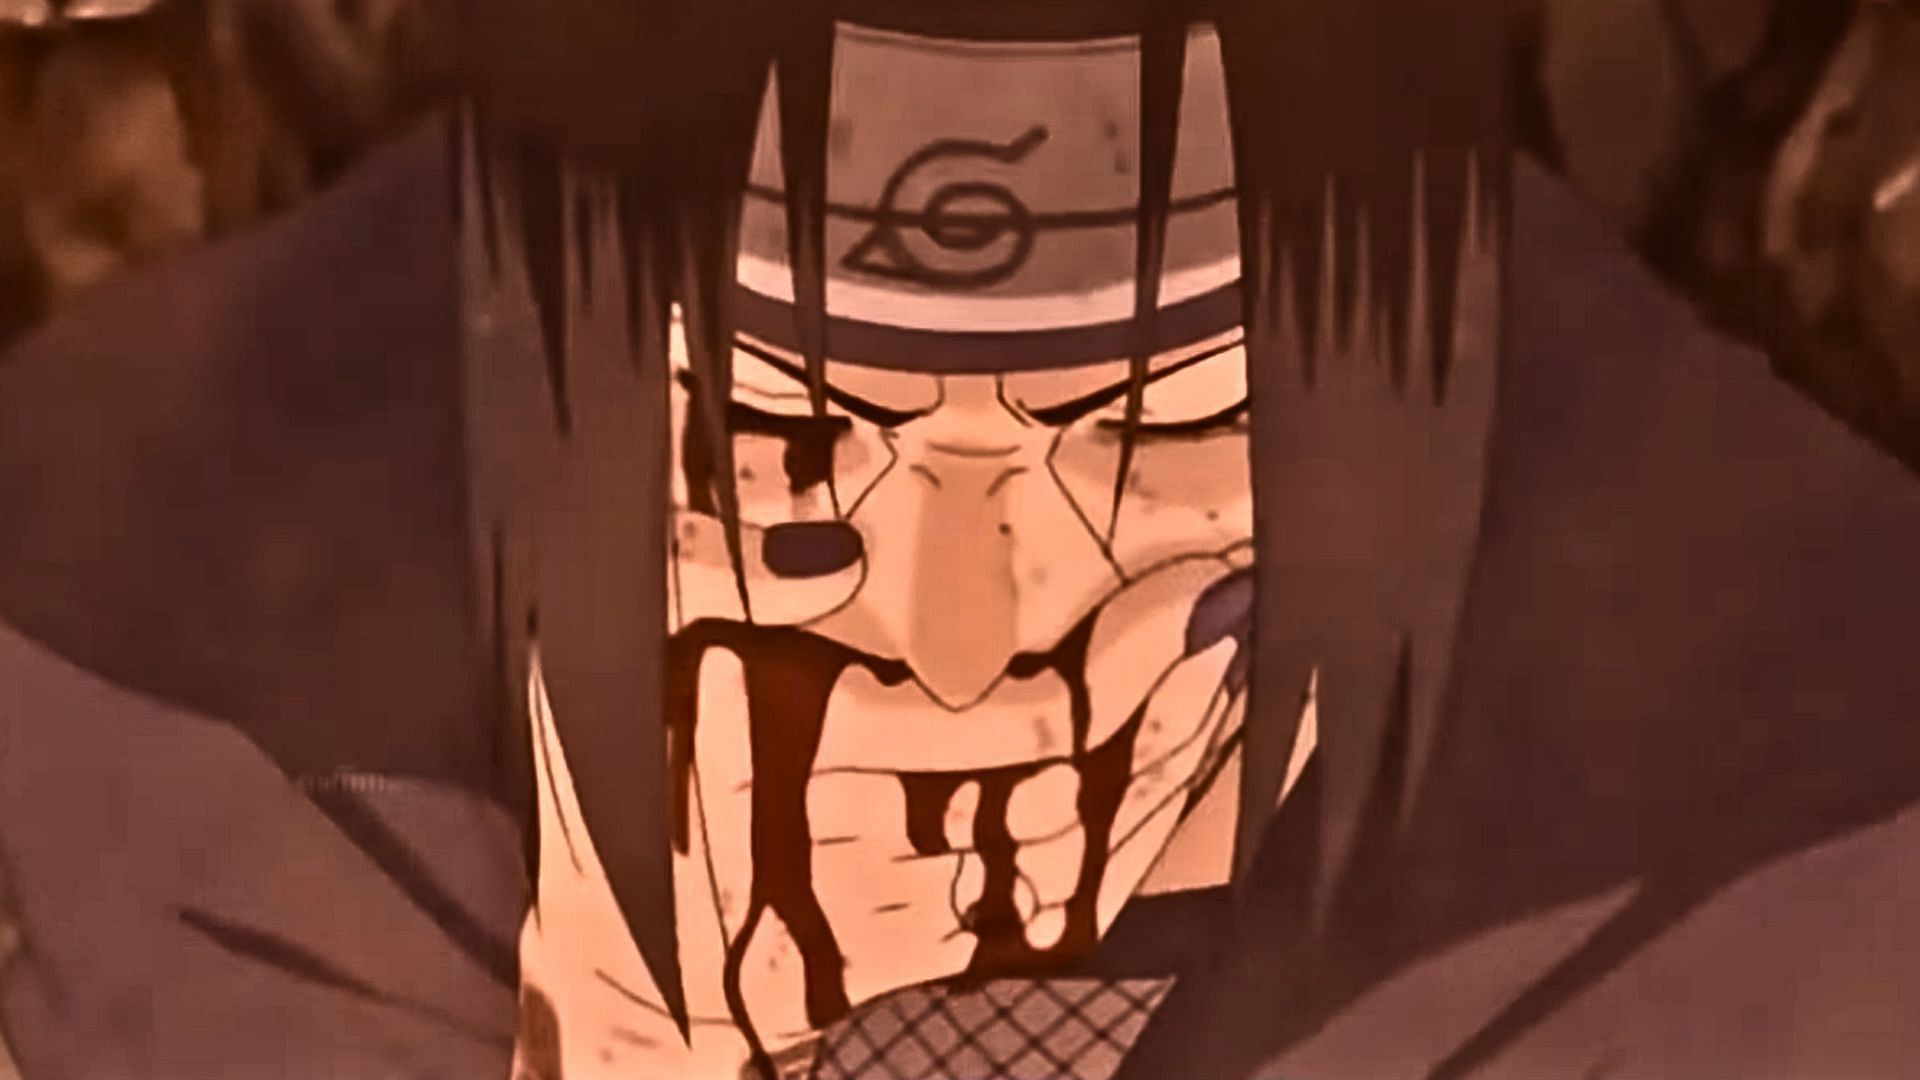 Itachi Uchiha as seen in Naruto Shippuden (Image via Studio Pierrot)